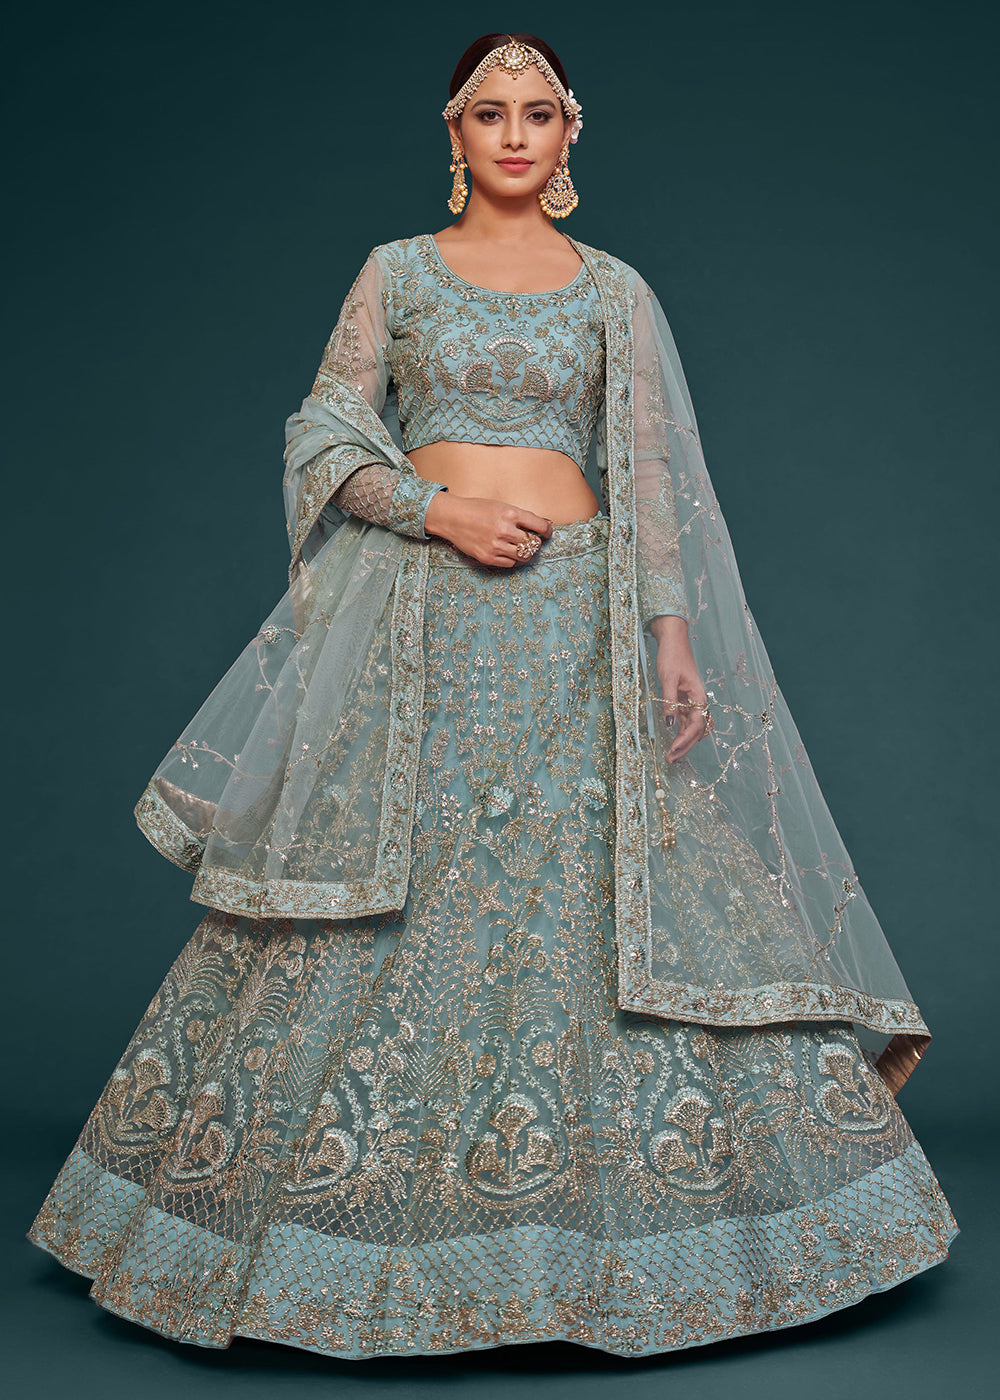 Buy Now Ocean Blue Embroidered Soft Net Wedding Lehenga Choli Online in USA, UK, Canada & Worldwide at Empress Clothing.